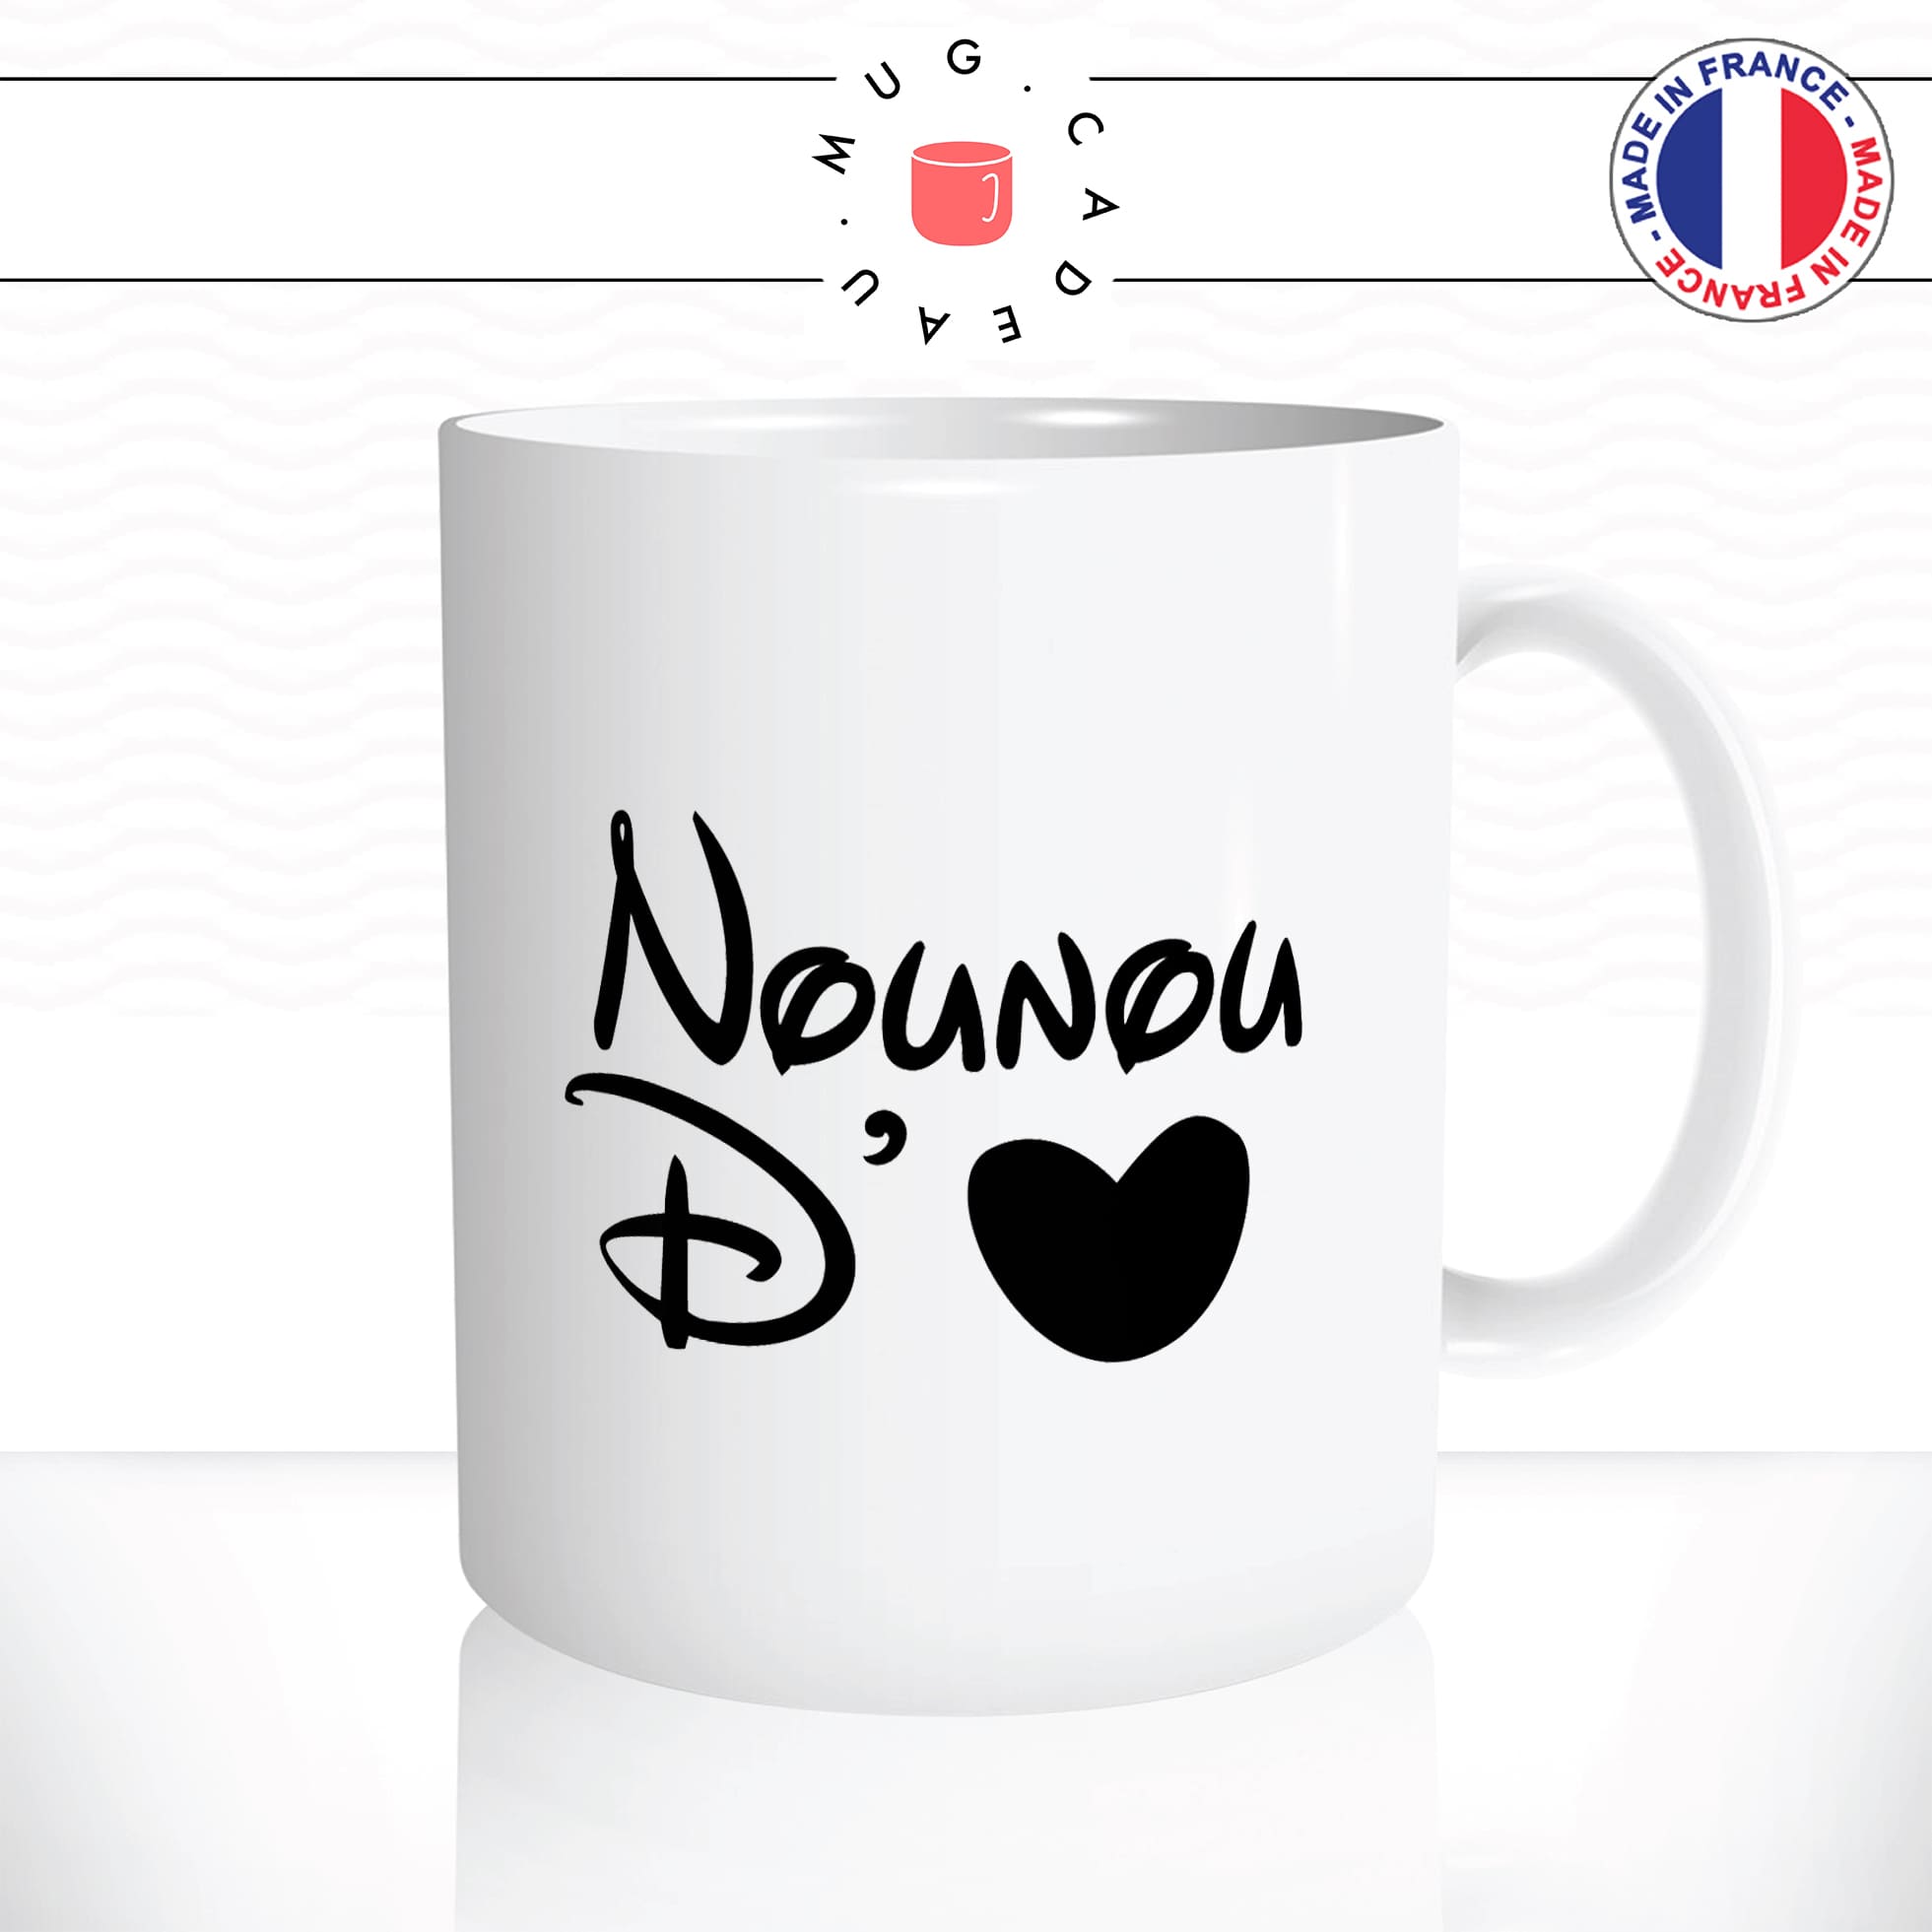 mug-tasse-blanc-nounou-damour-nourrisse-coeur-garderie-creche-humour-fun-idée-cadeau-originale-cool2